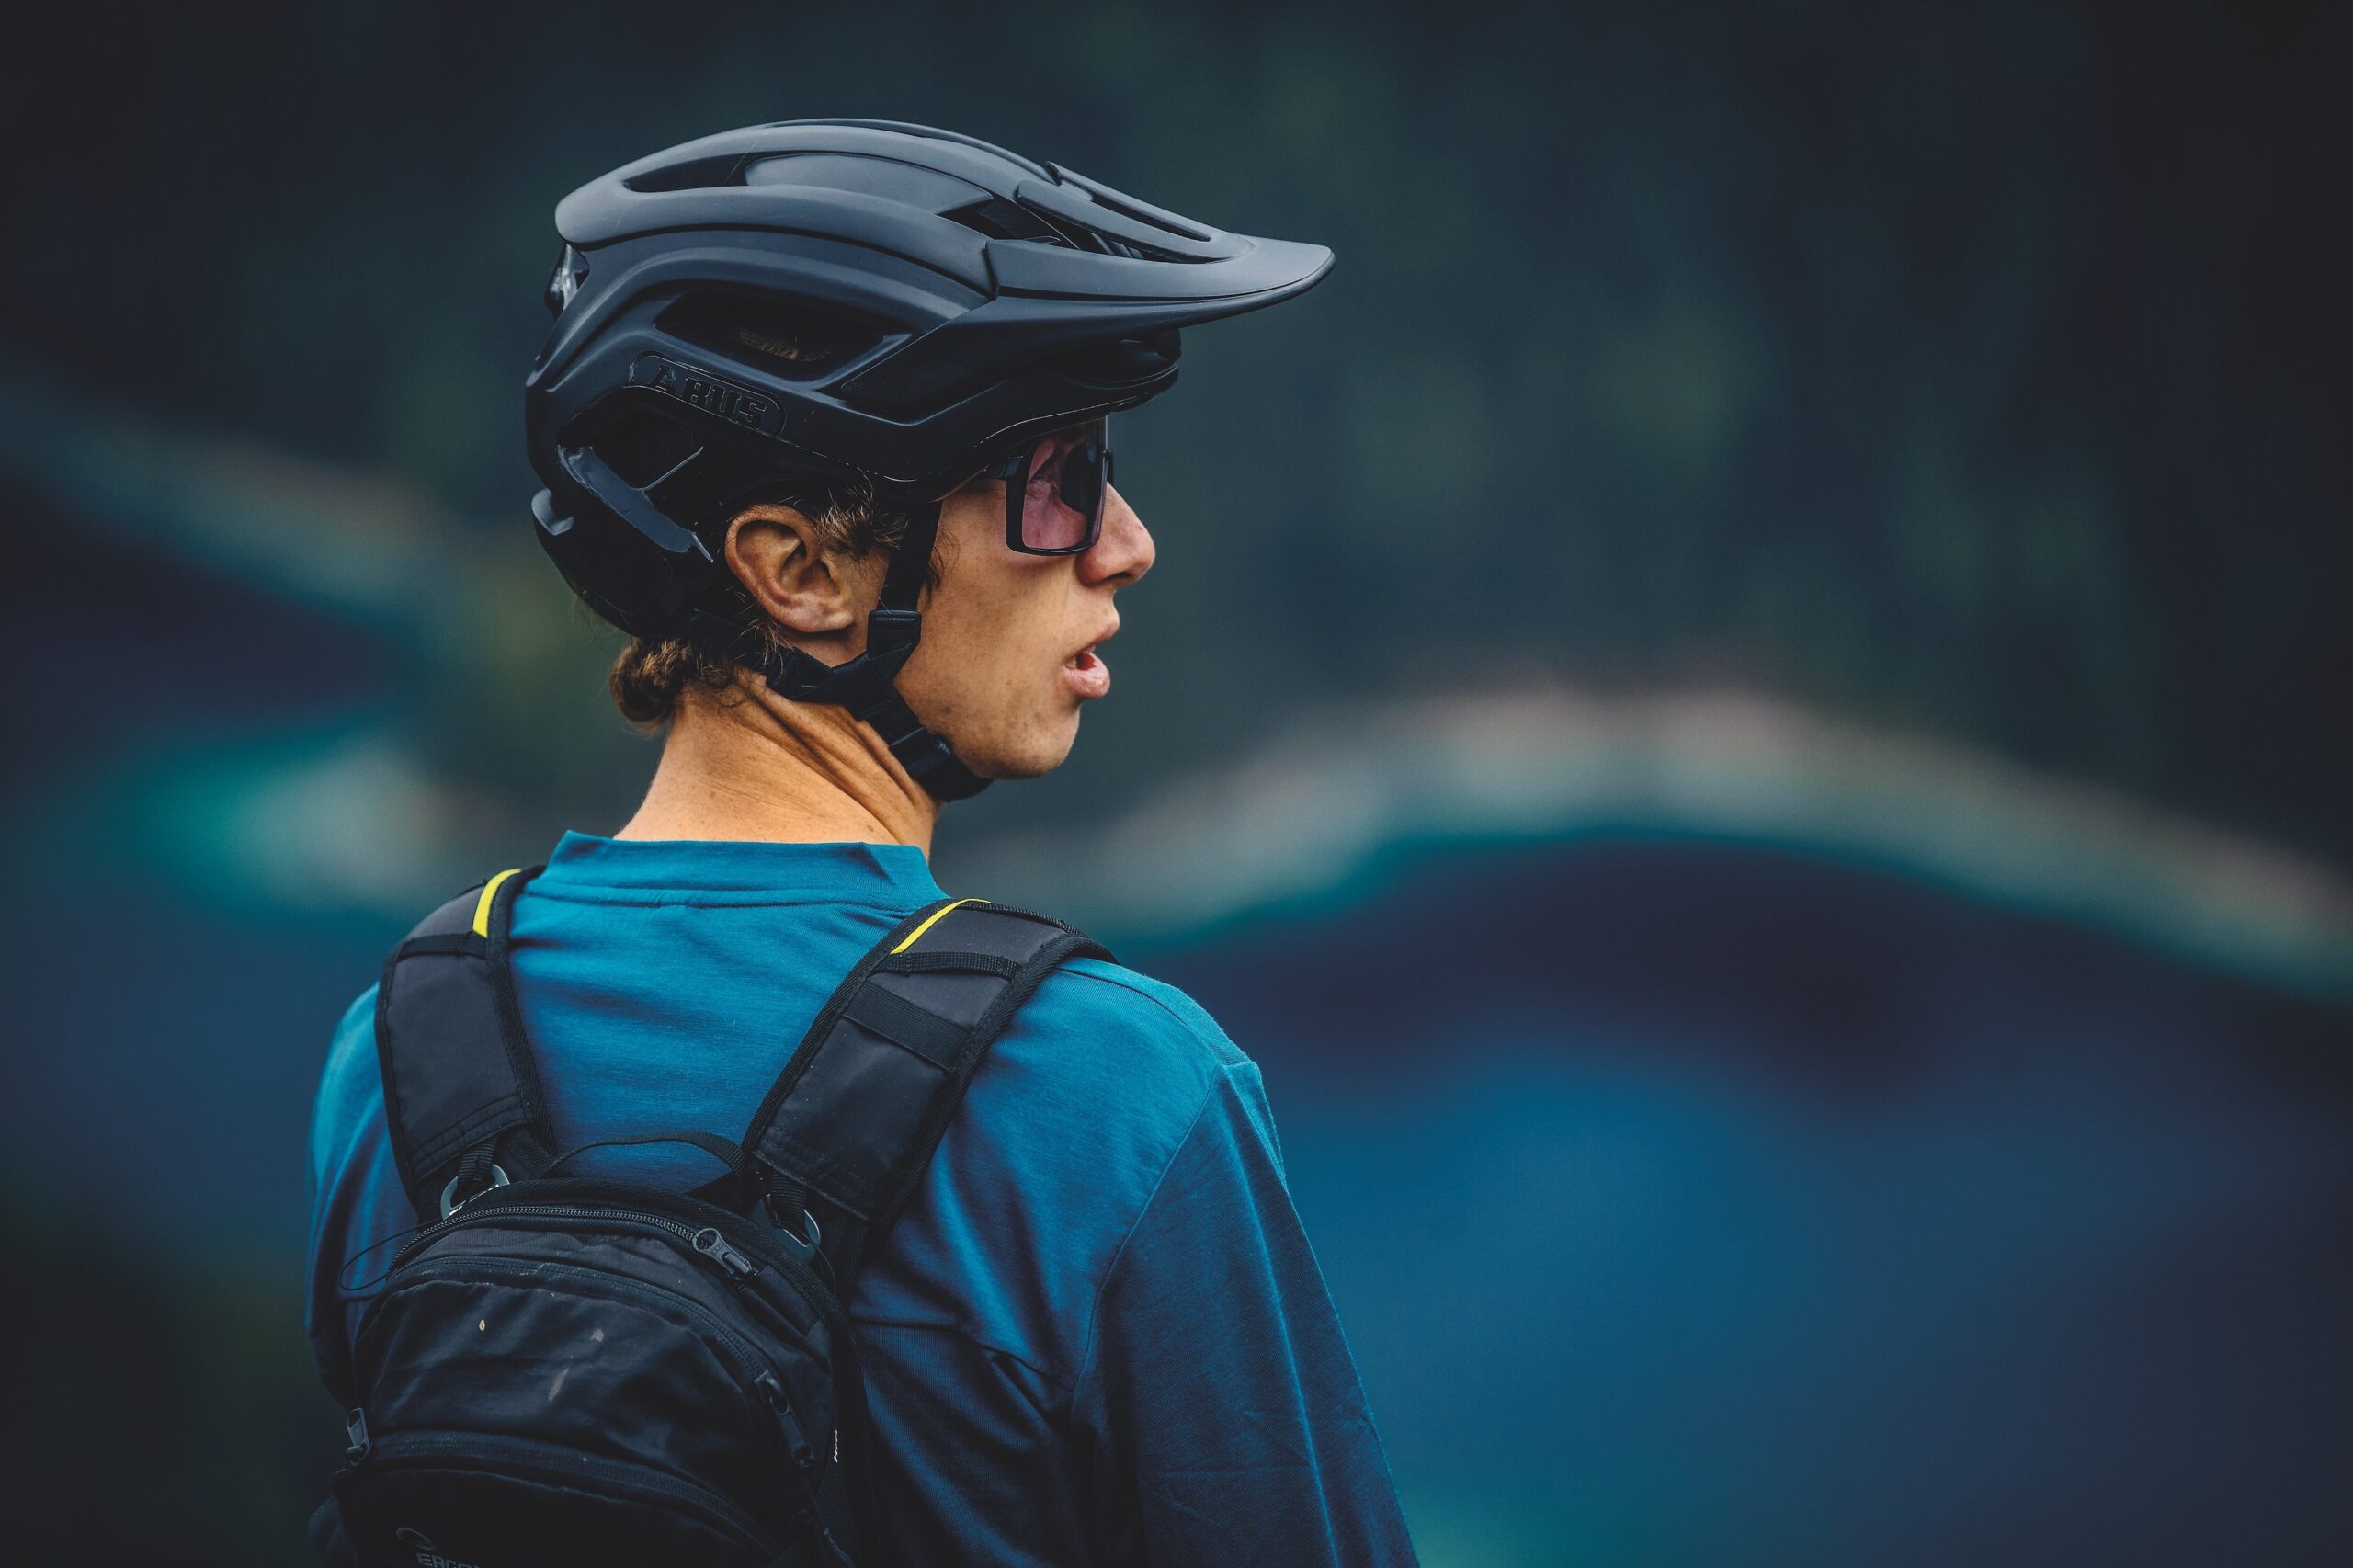 ABUS Introduces the CliffHanger Helmet – Mountain Bike Press Release